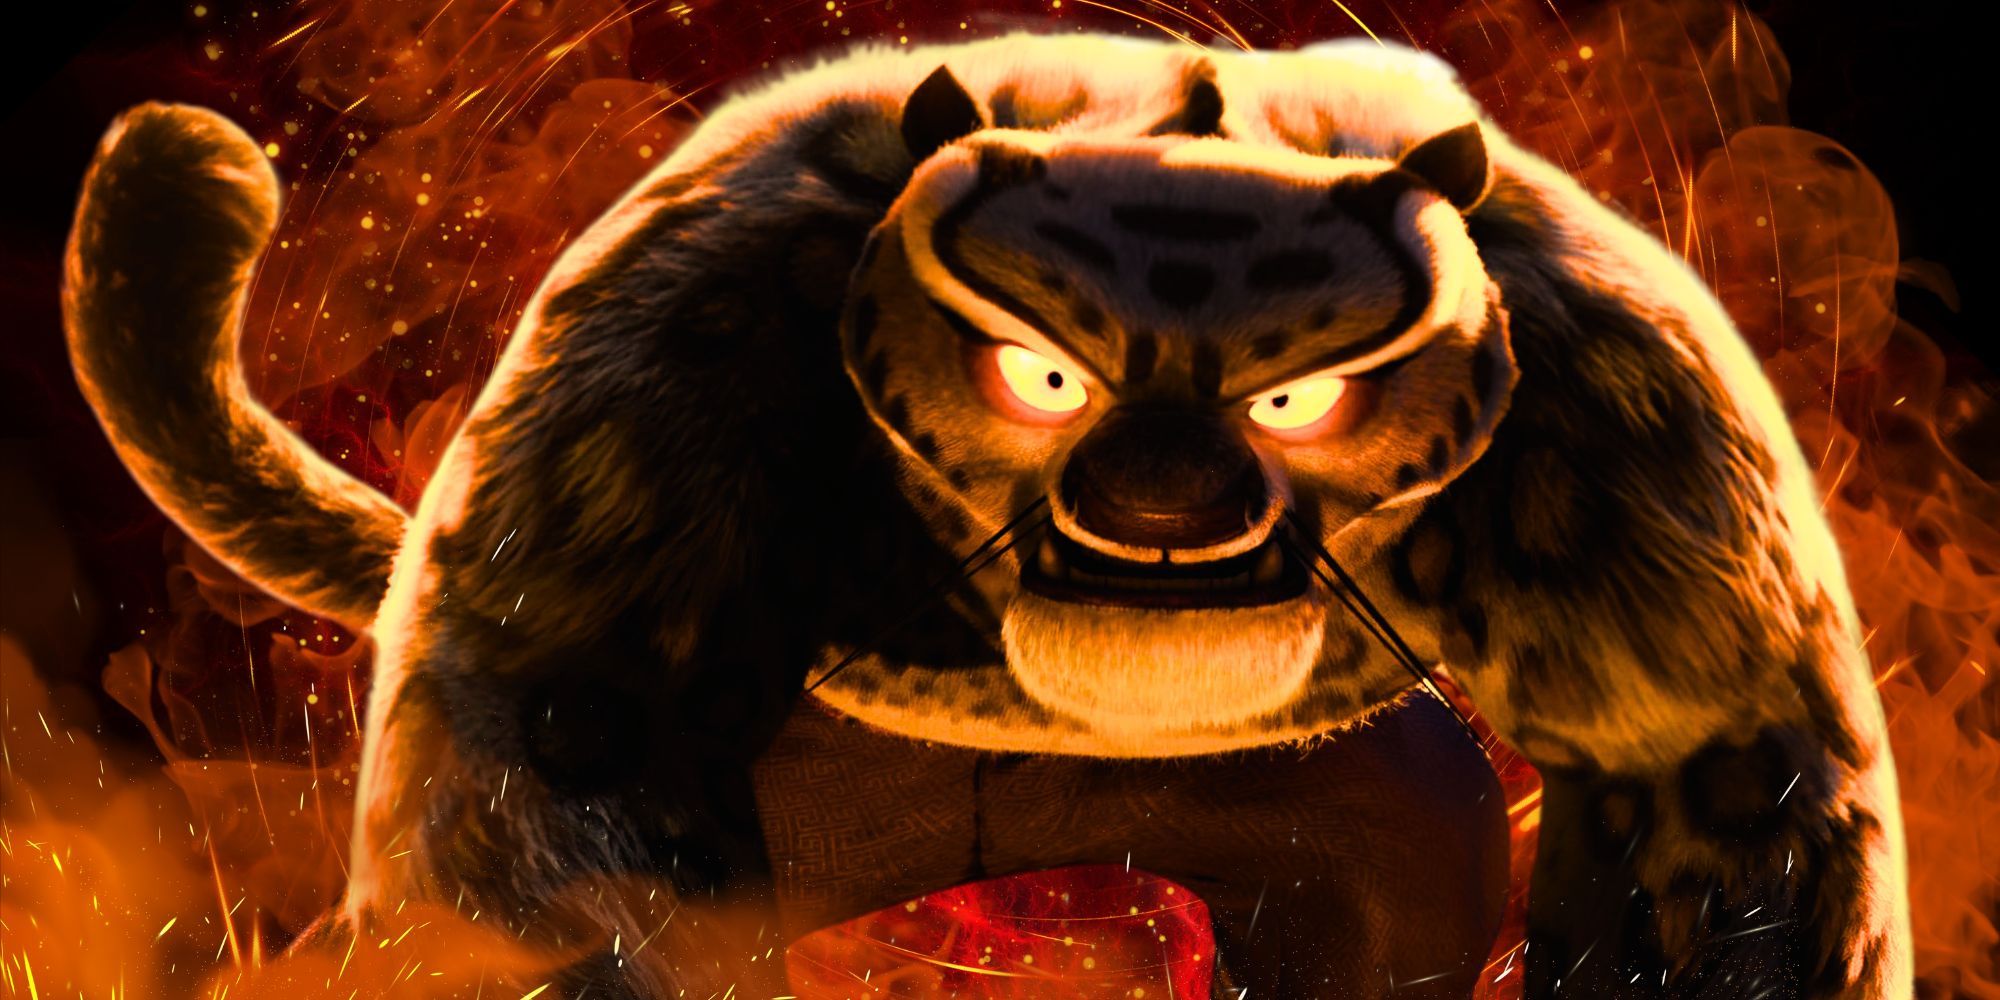 Kung Fu Panda 4 - Official Trailer - IGN